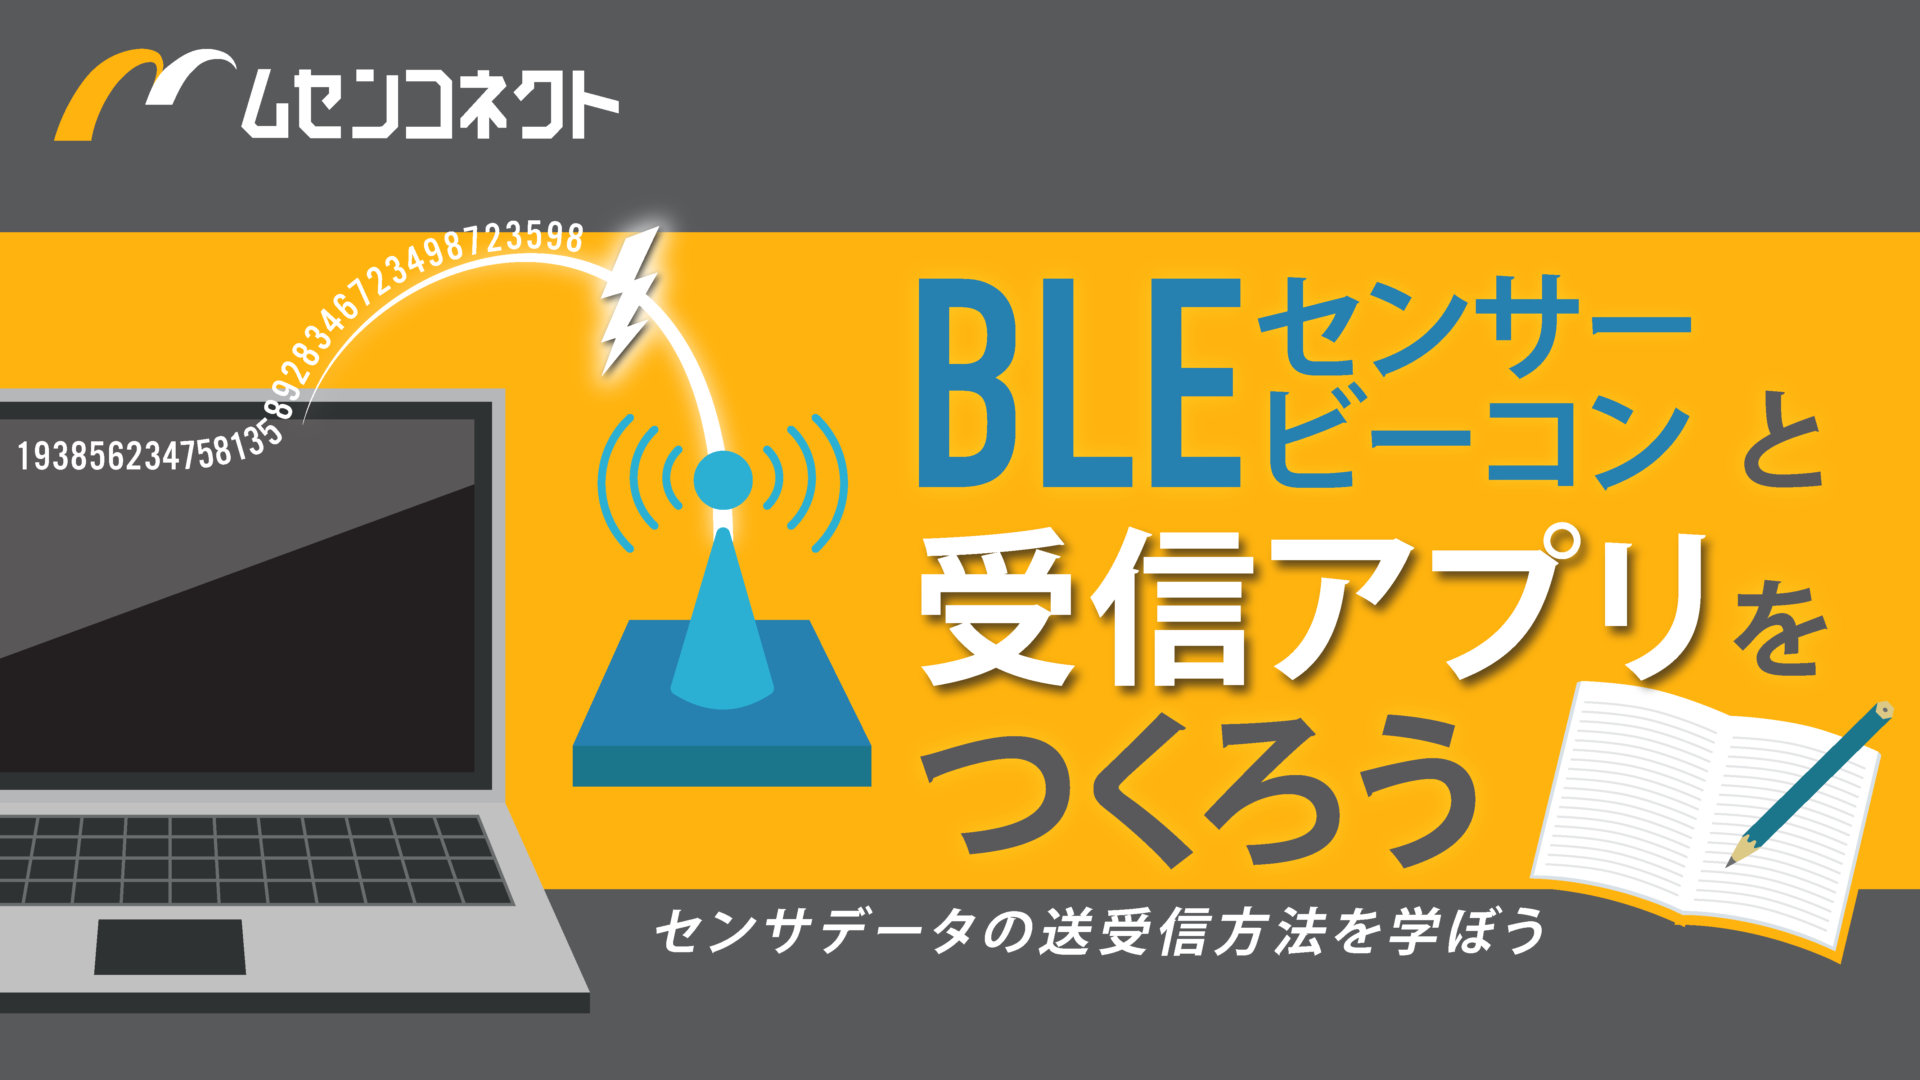 BLEによるセンサデータ送信の仕組みとビーコンフォーマット「オープン